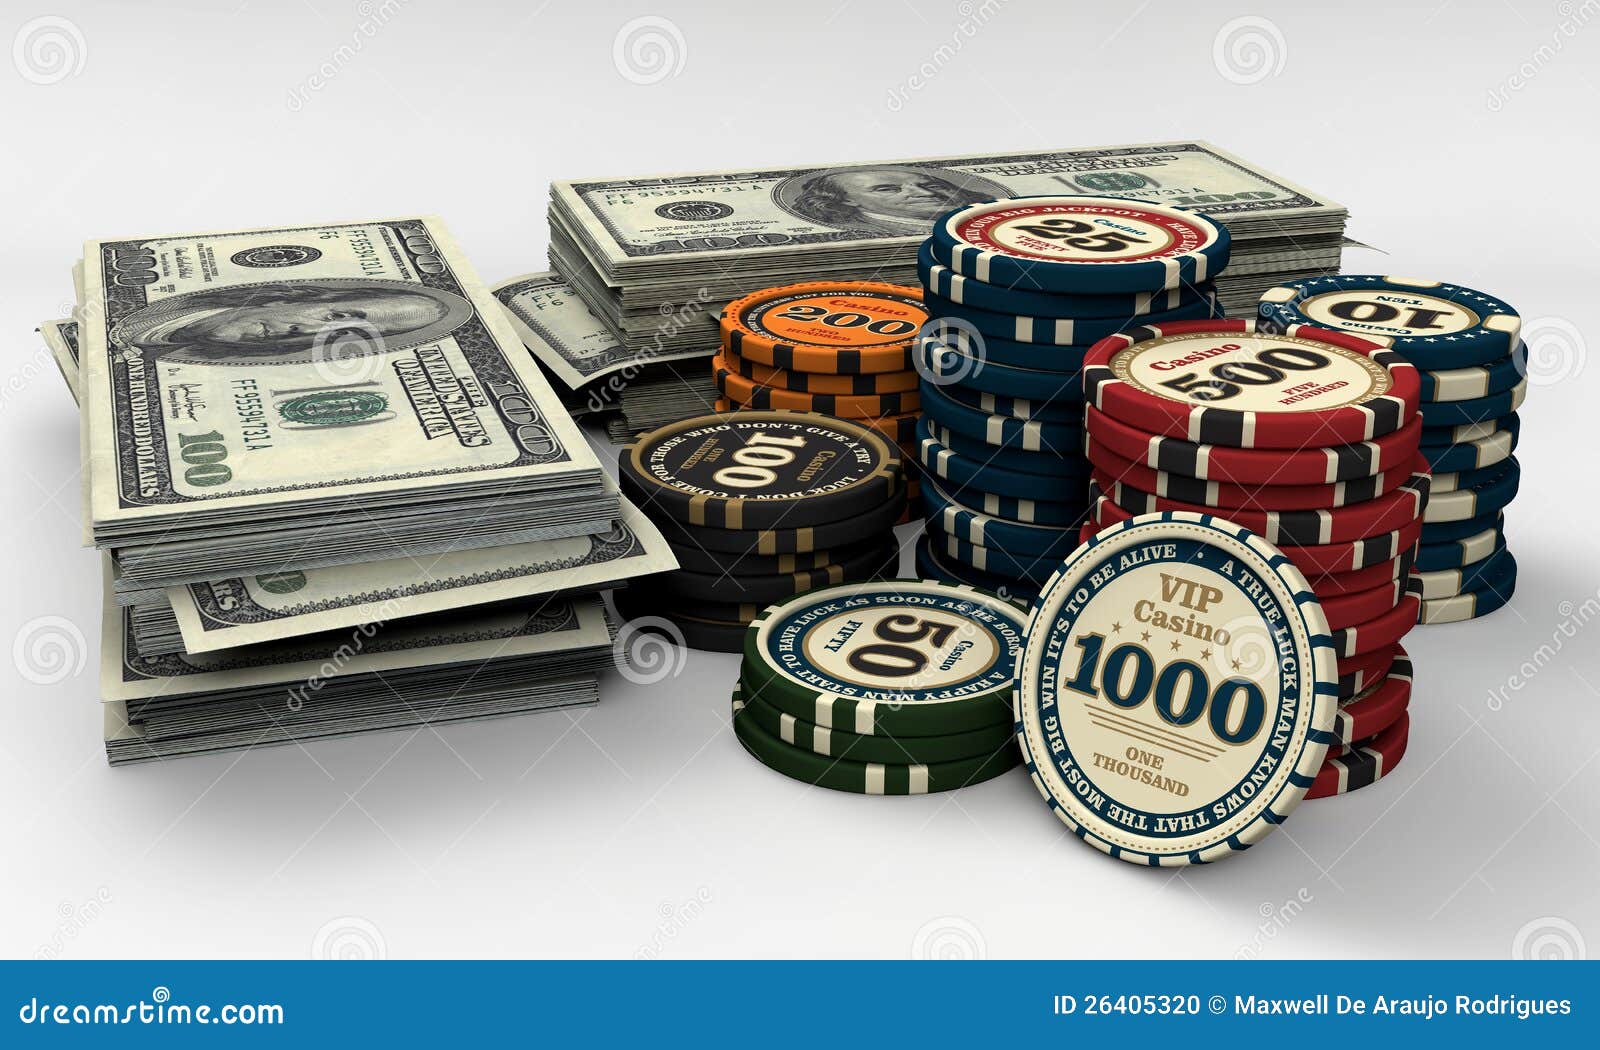 casino chips and money